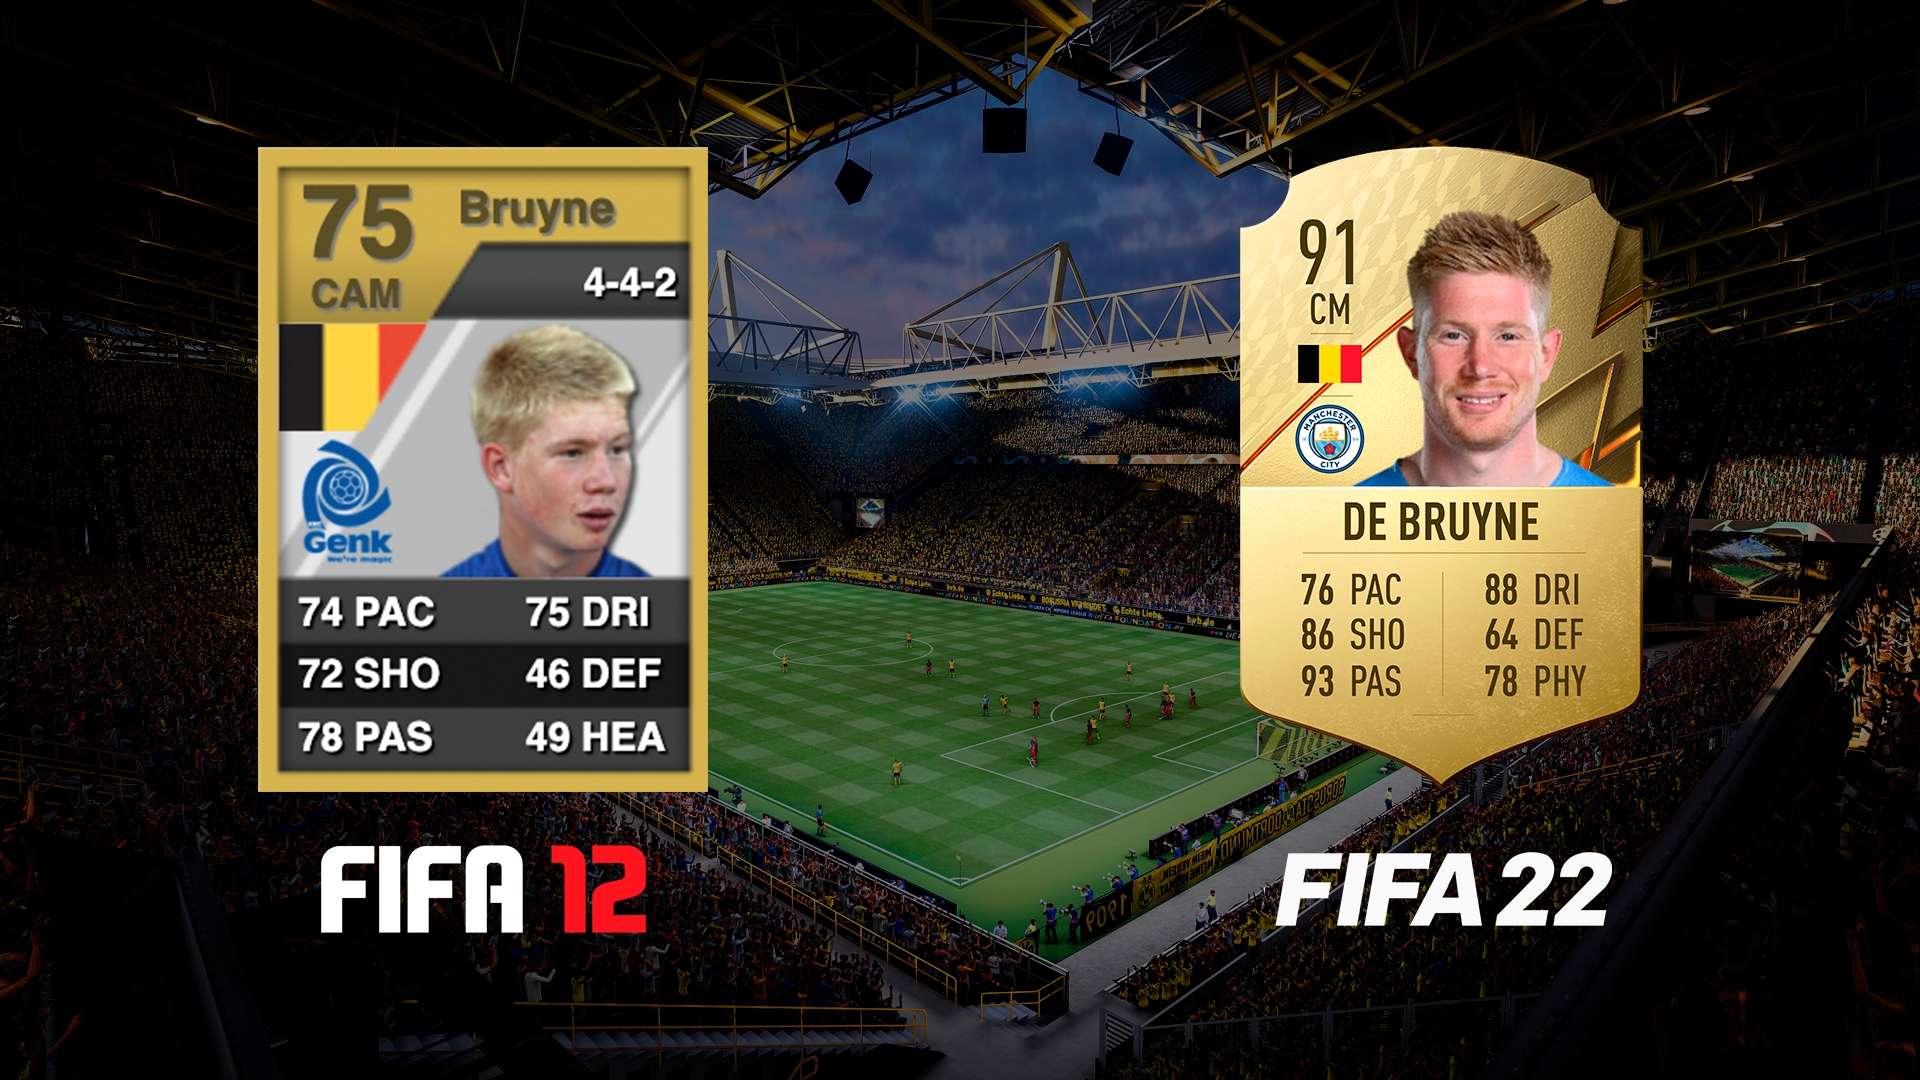 De Bruyne - FIFA12xFIFA22